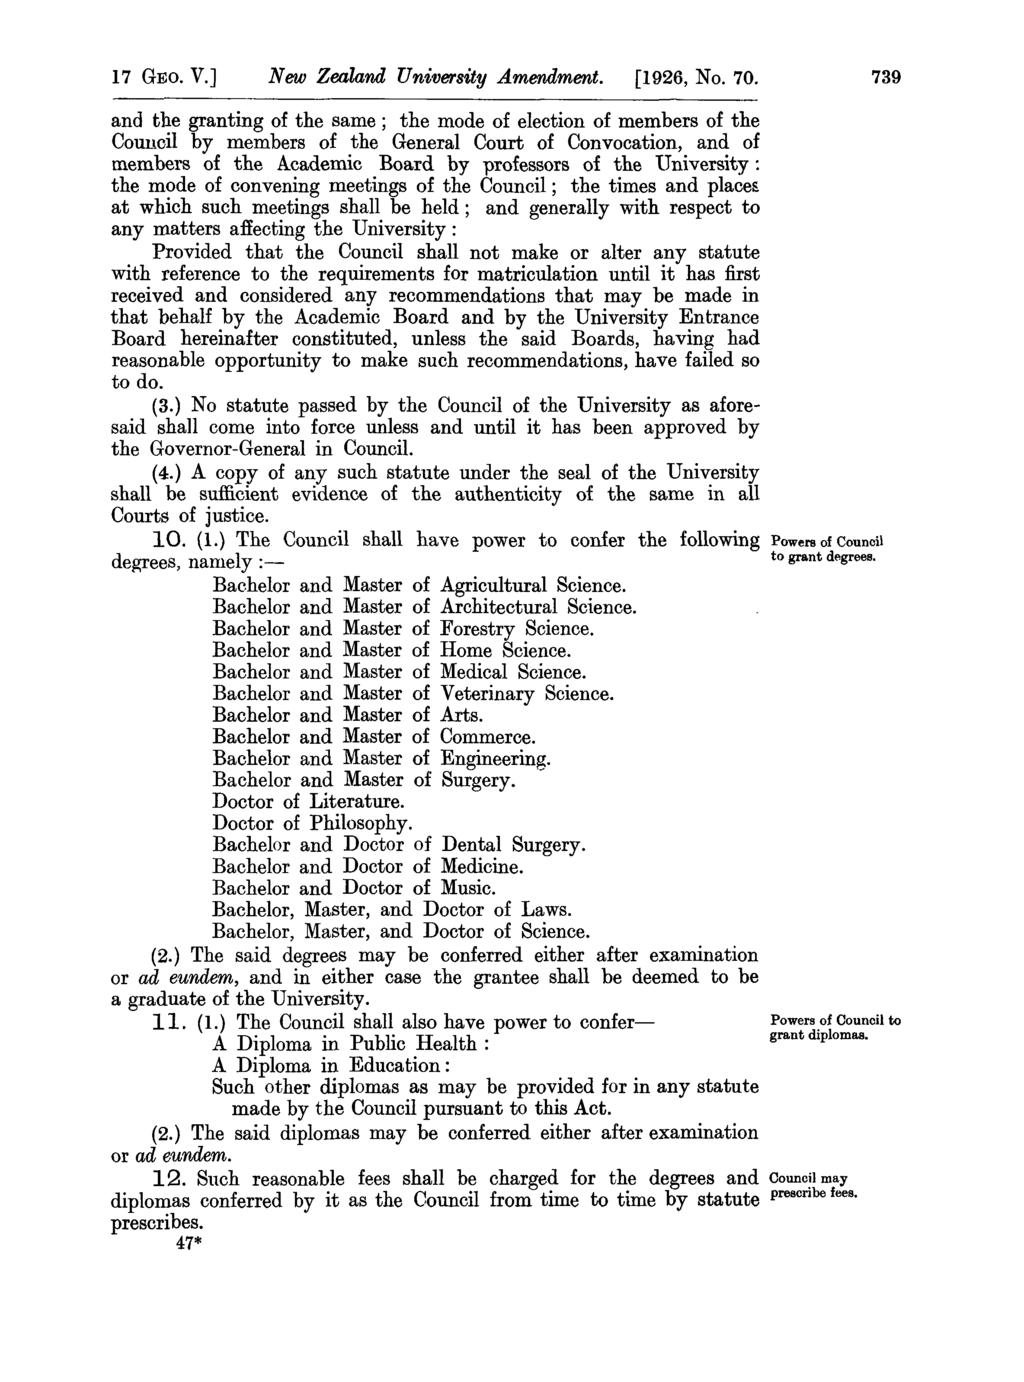 17 GEO. V.] Nw Zealand University Amendment. [1926, No. 70.